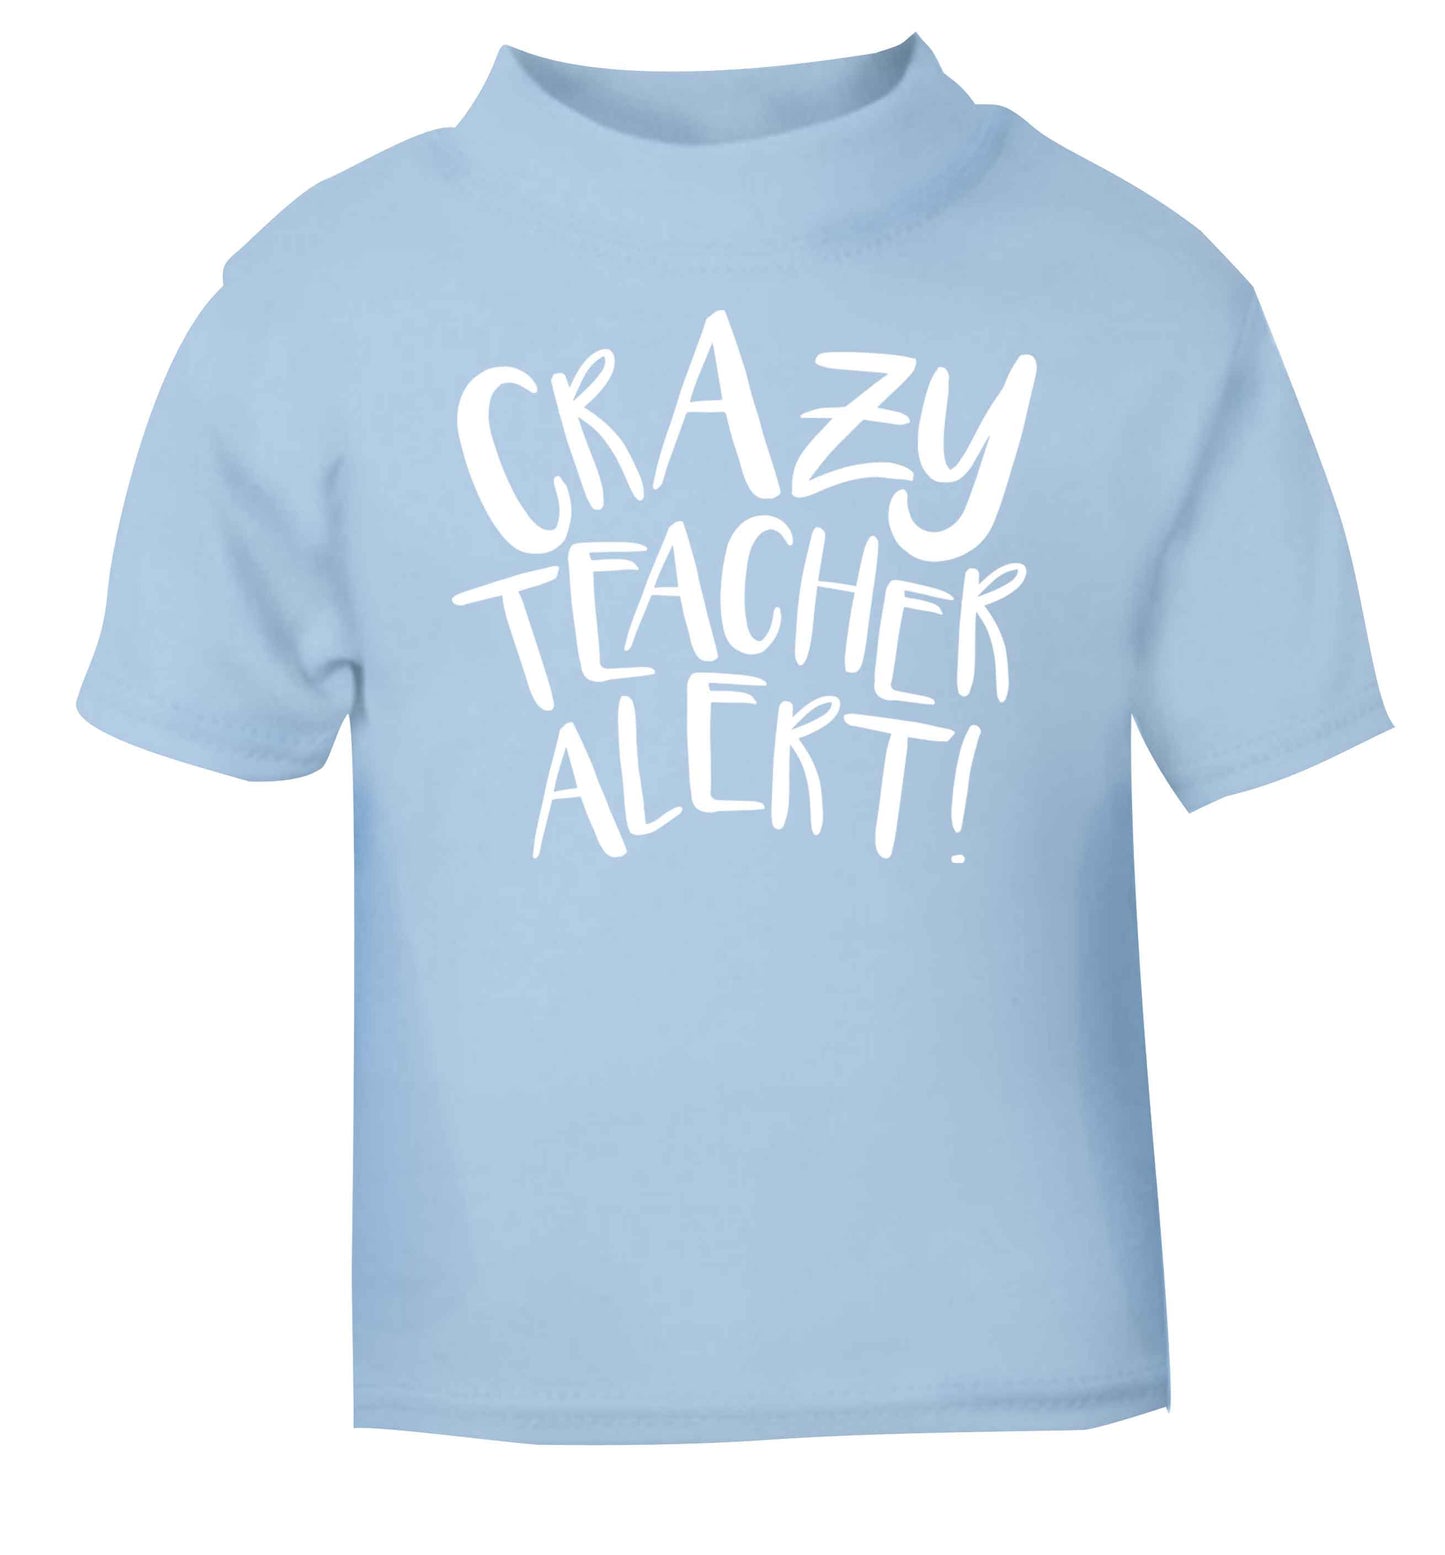 Crazy teacher alert light blue baby toddler Tshirt 2 Years